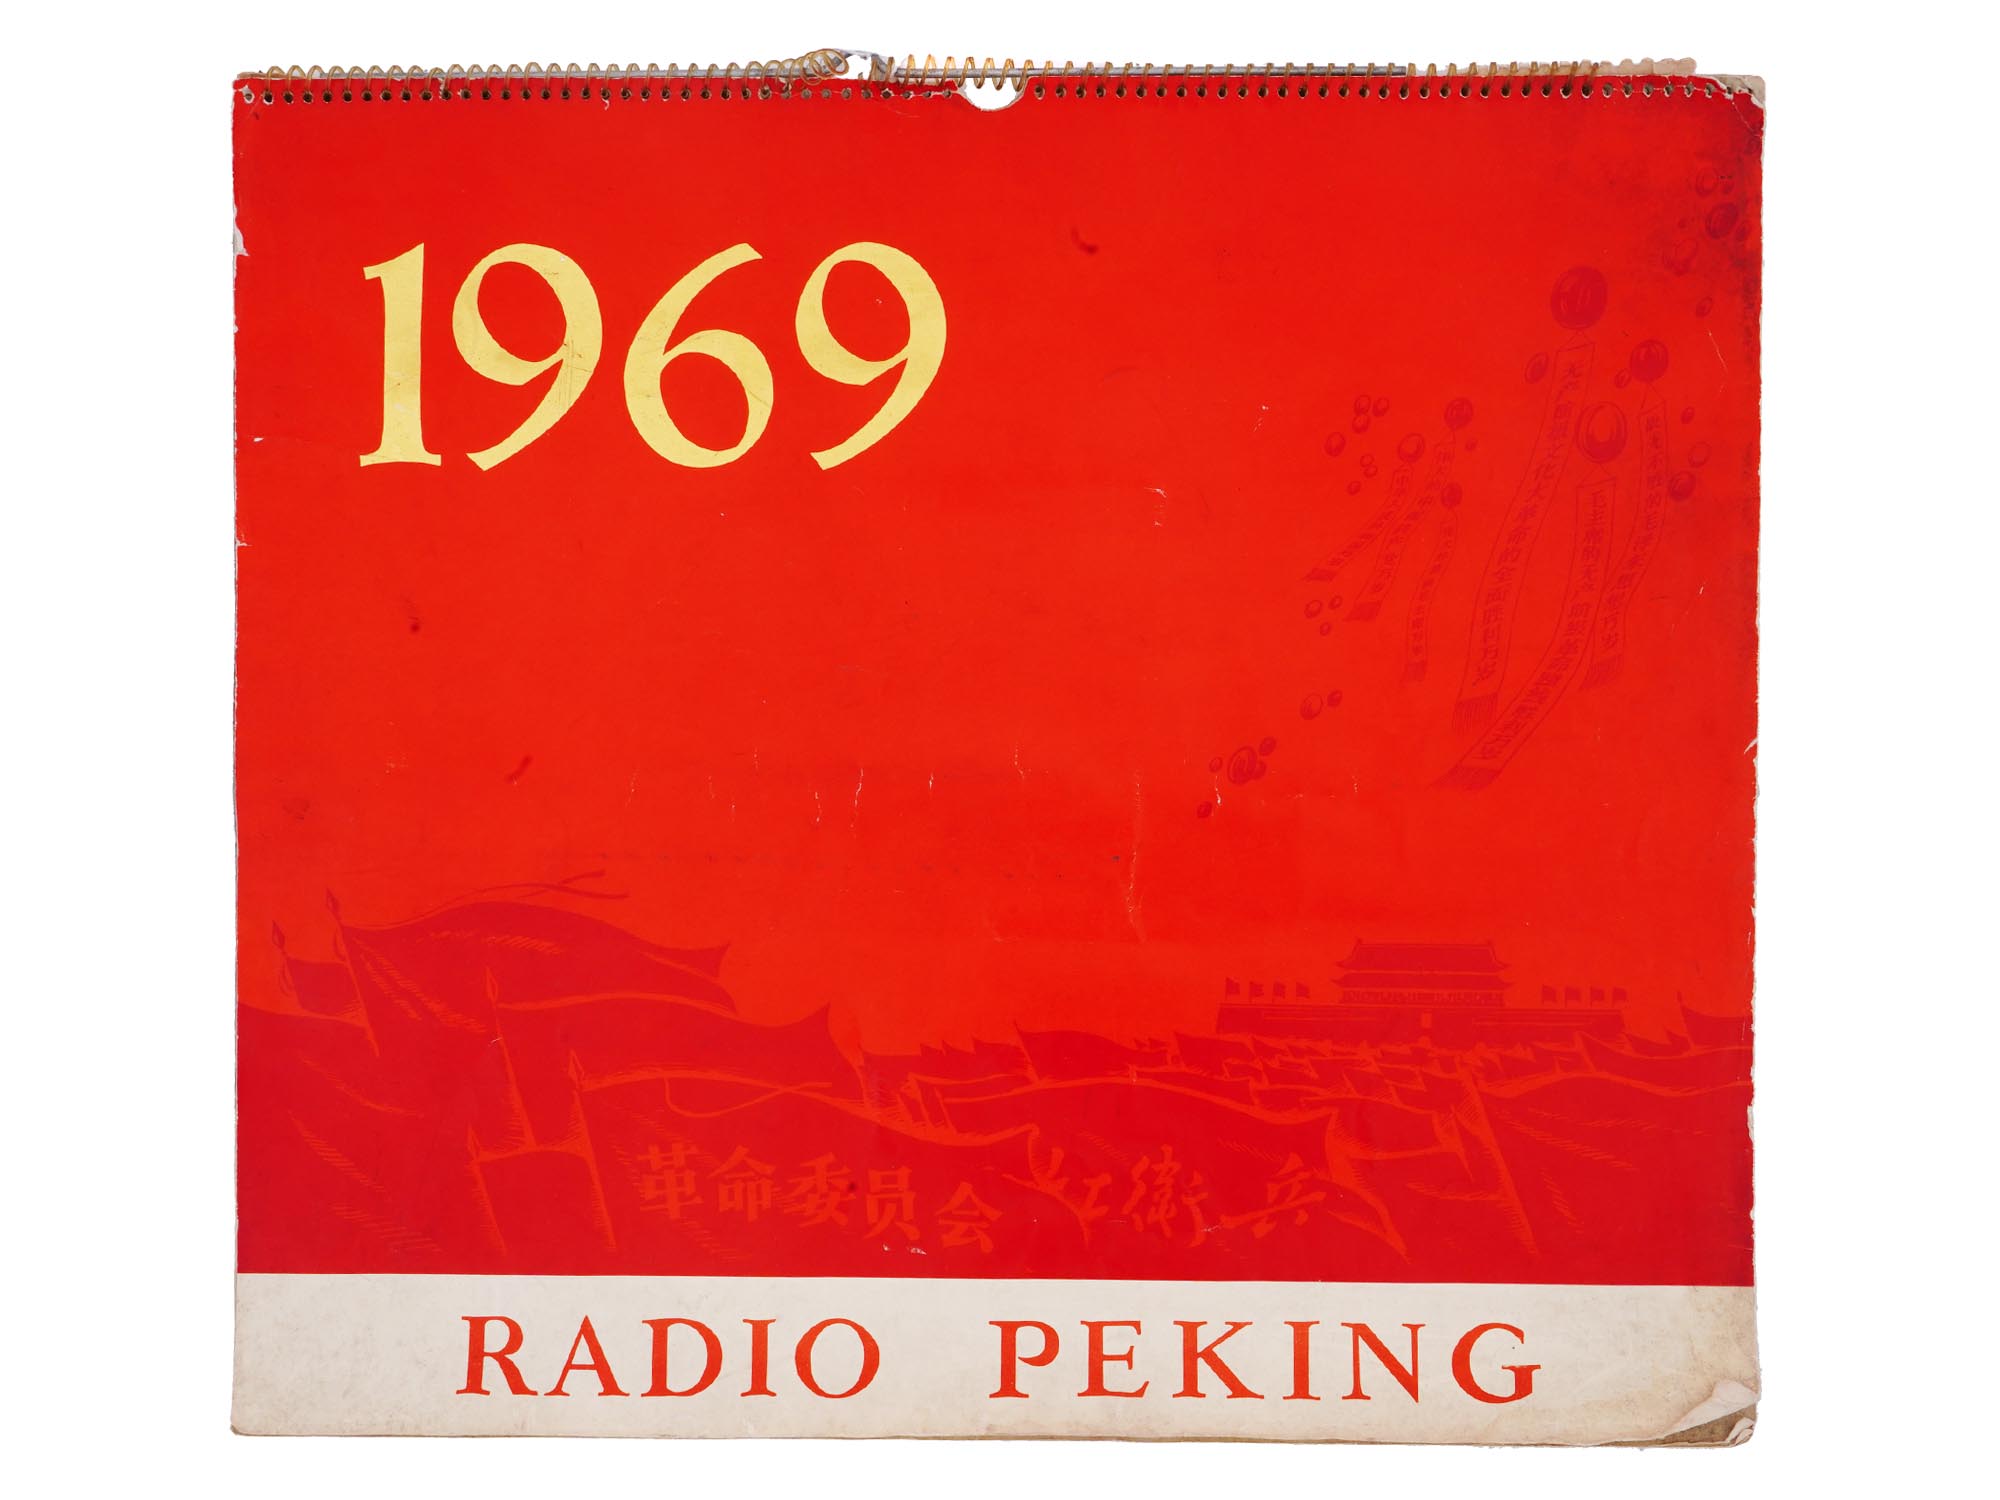 1969 RADIO PEKING CHINESE CALENDAR W ILLUSTRATIONS PIC-0